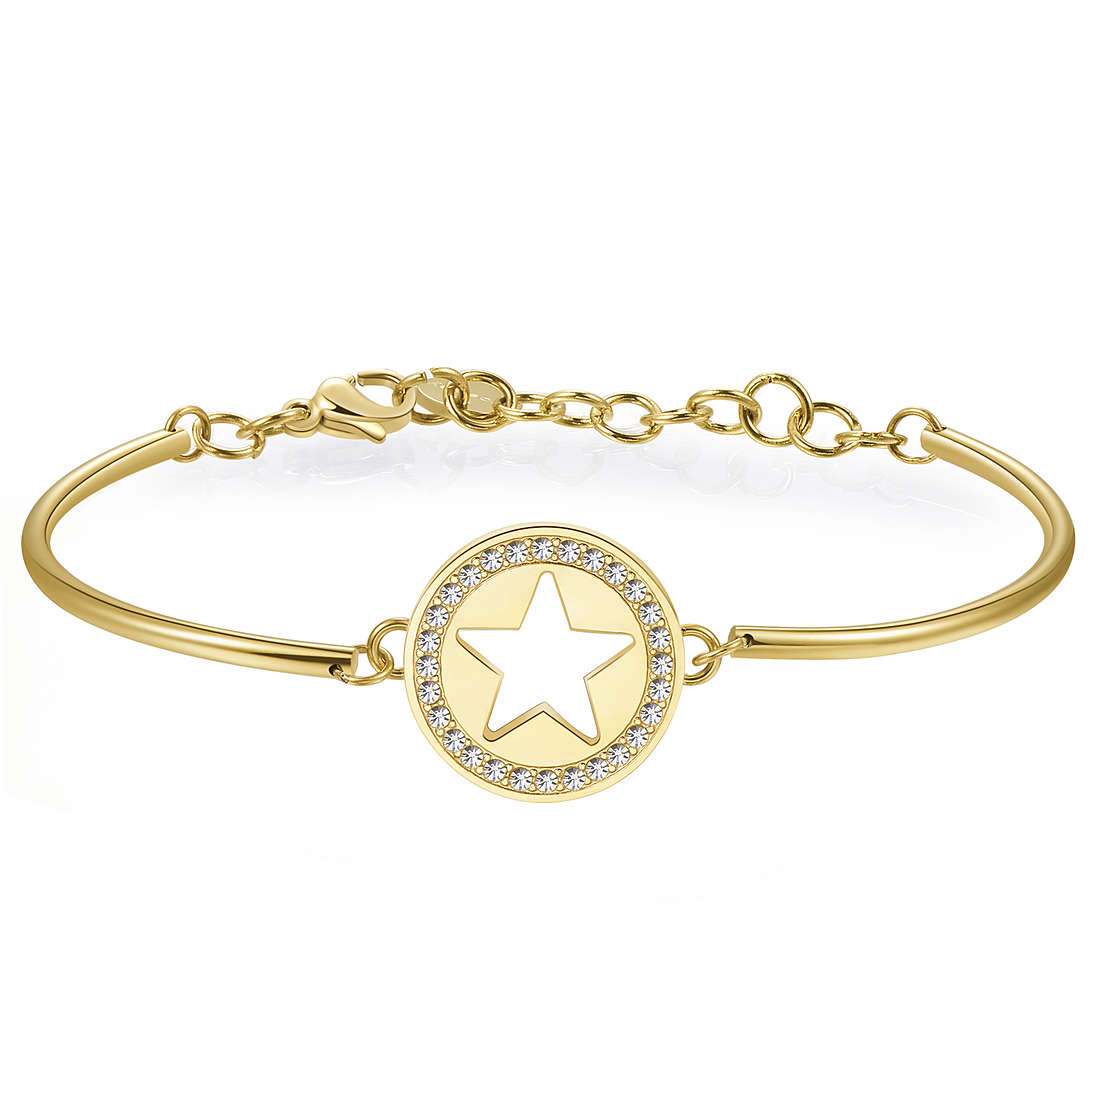 bracelet woman jewellery Brosway Veronica Ferraro BVF13